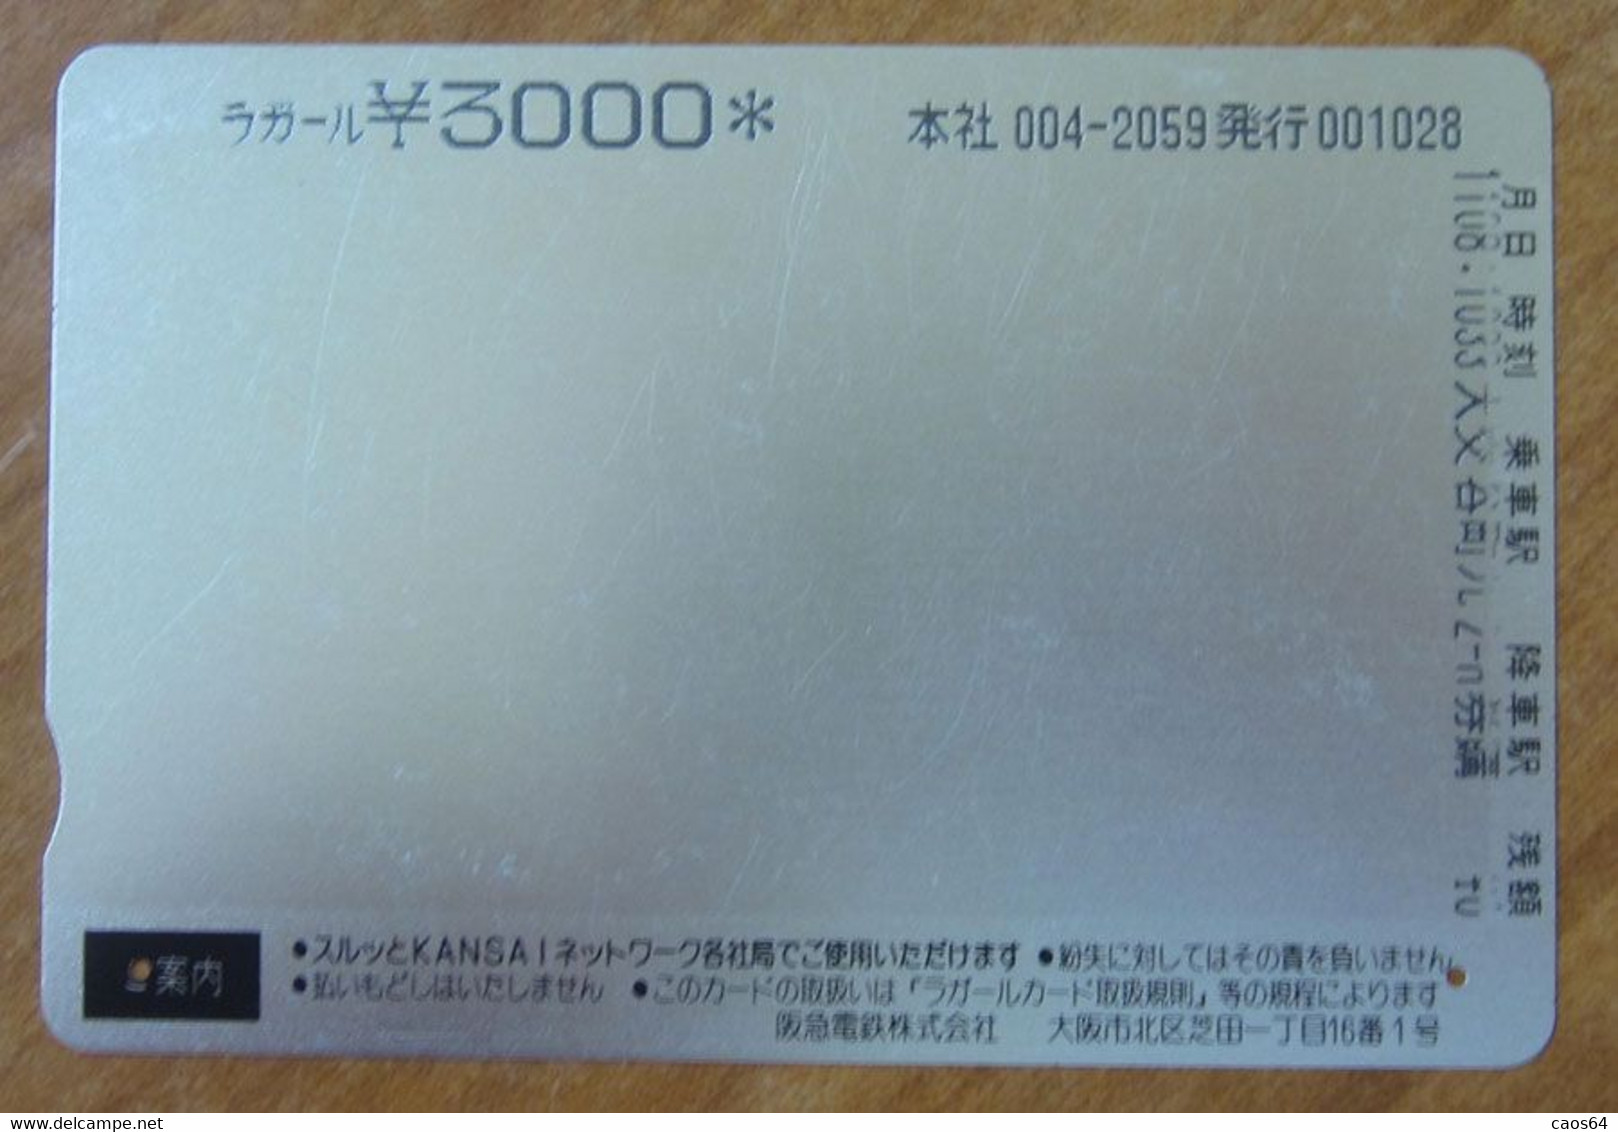 GIAPPONE Ticket Biglietto Treni City Train - Hankyu Railway Kansai Railway Lagare Card 3.000 ¥ - Usato - Mundo